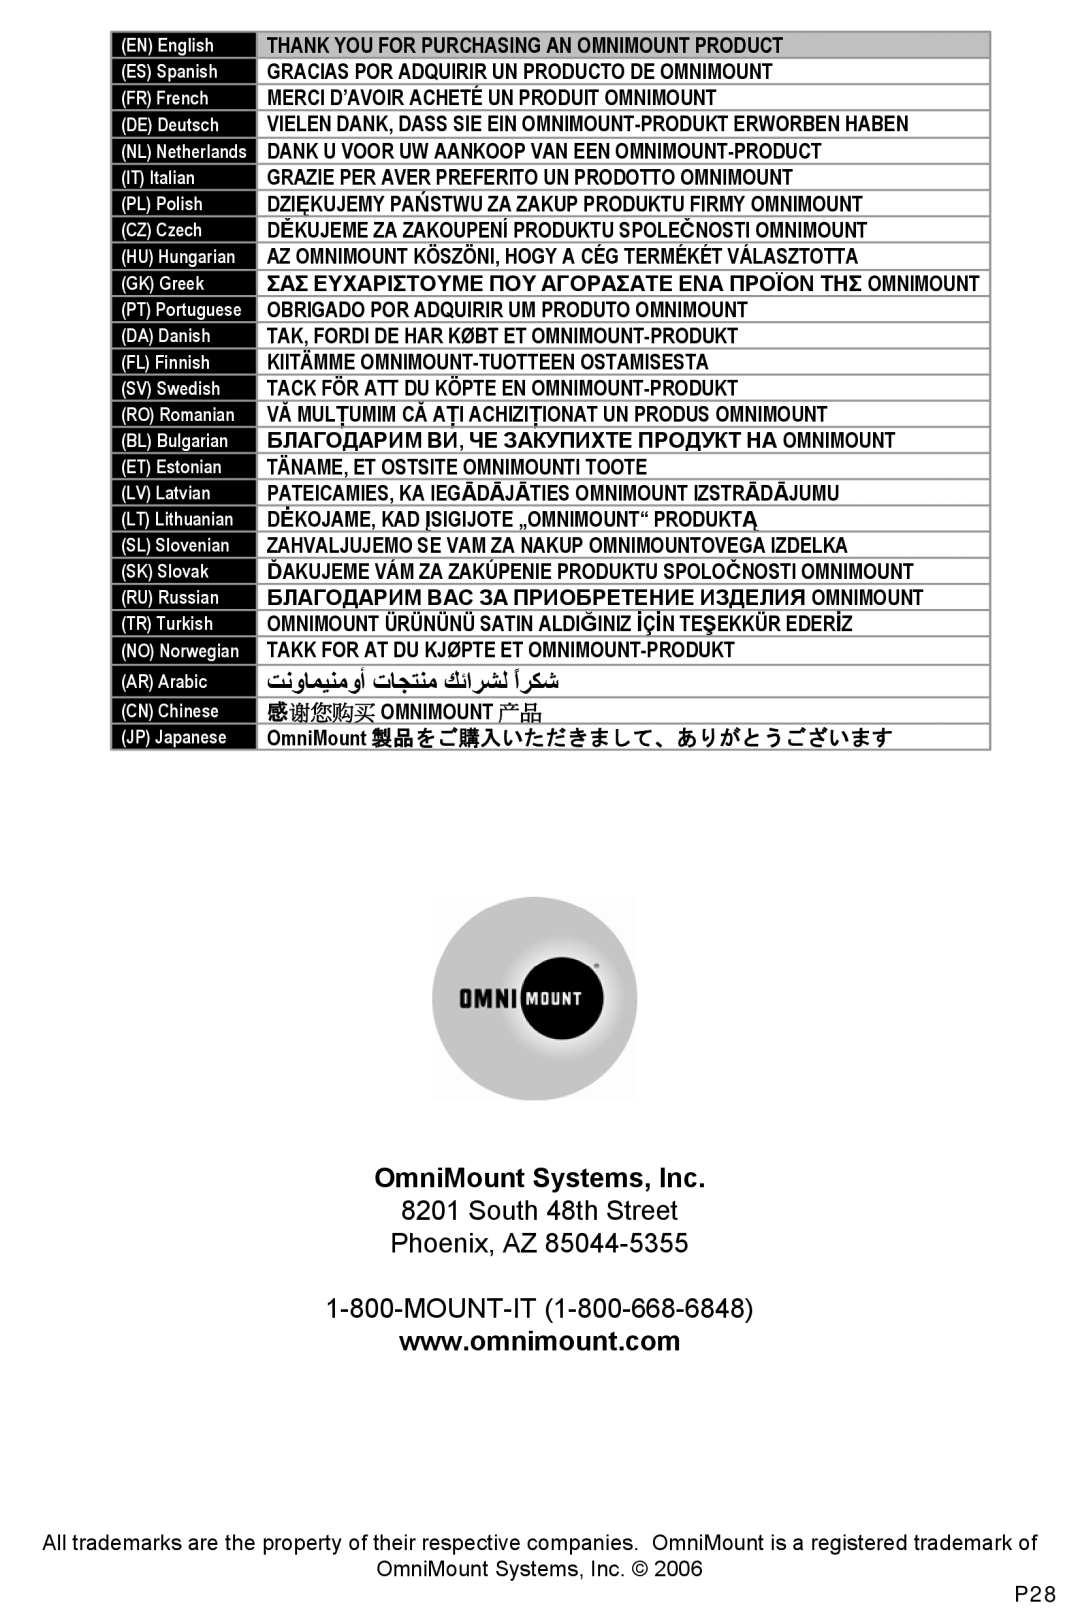 Omnimount OM1100113 OmniMount Systems, Inc, ﺖﻧوﺎﻤﻴﻨﻣوأ تﺎﺠﺘﻨﻣ ﻚﺋاﺮﺸﻟ اﺮﻜﺷً, Thank You For Purchasing An Omnimount Product 